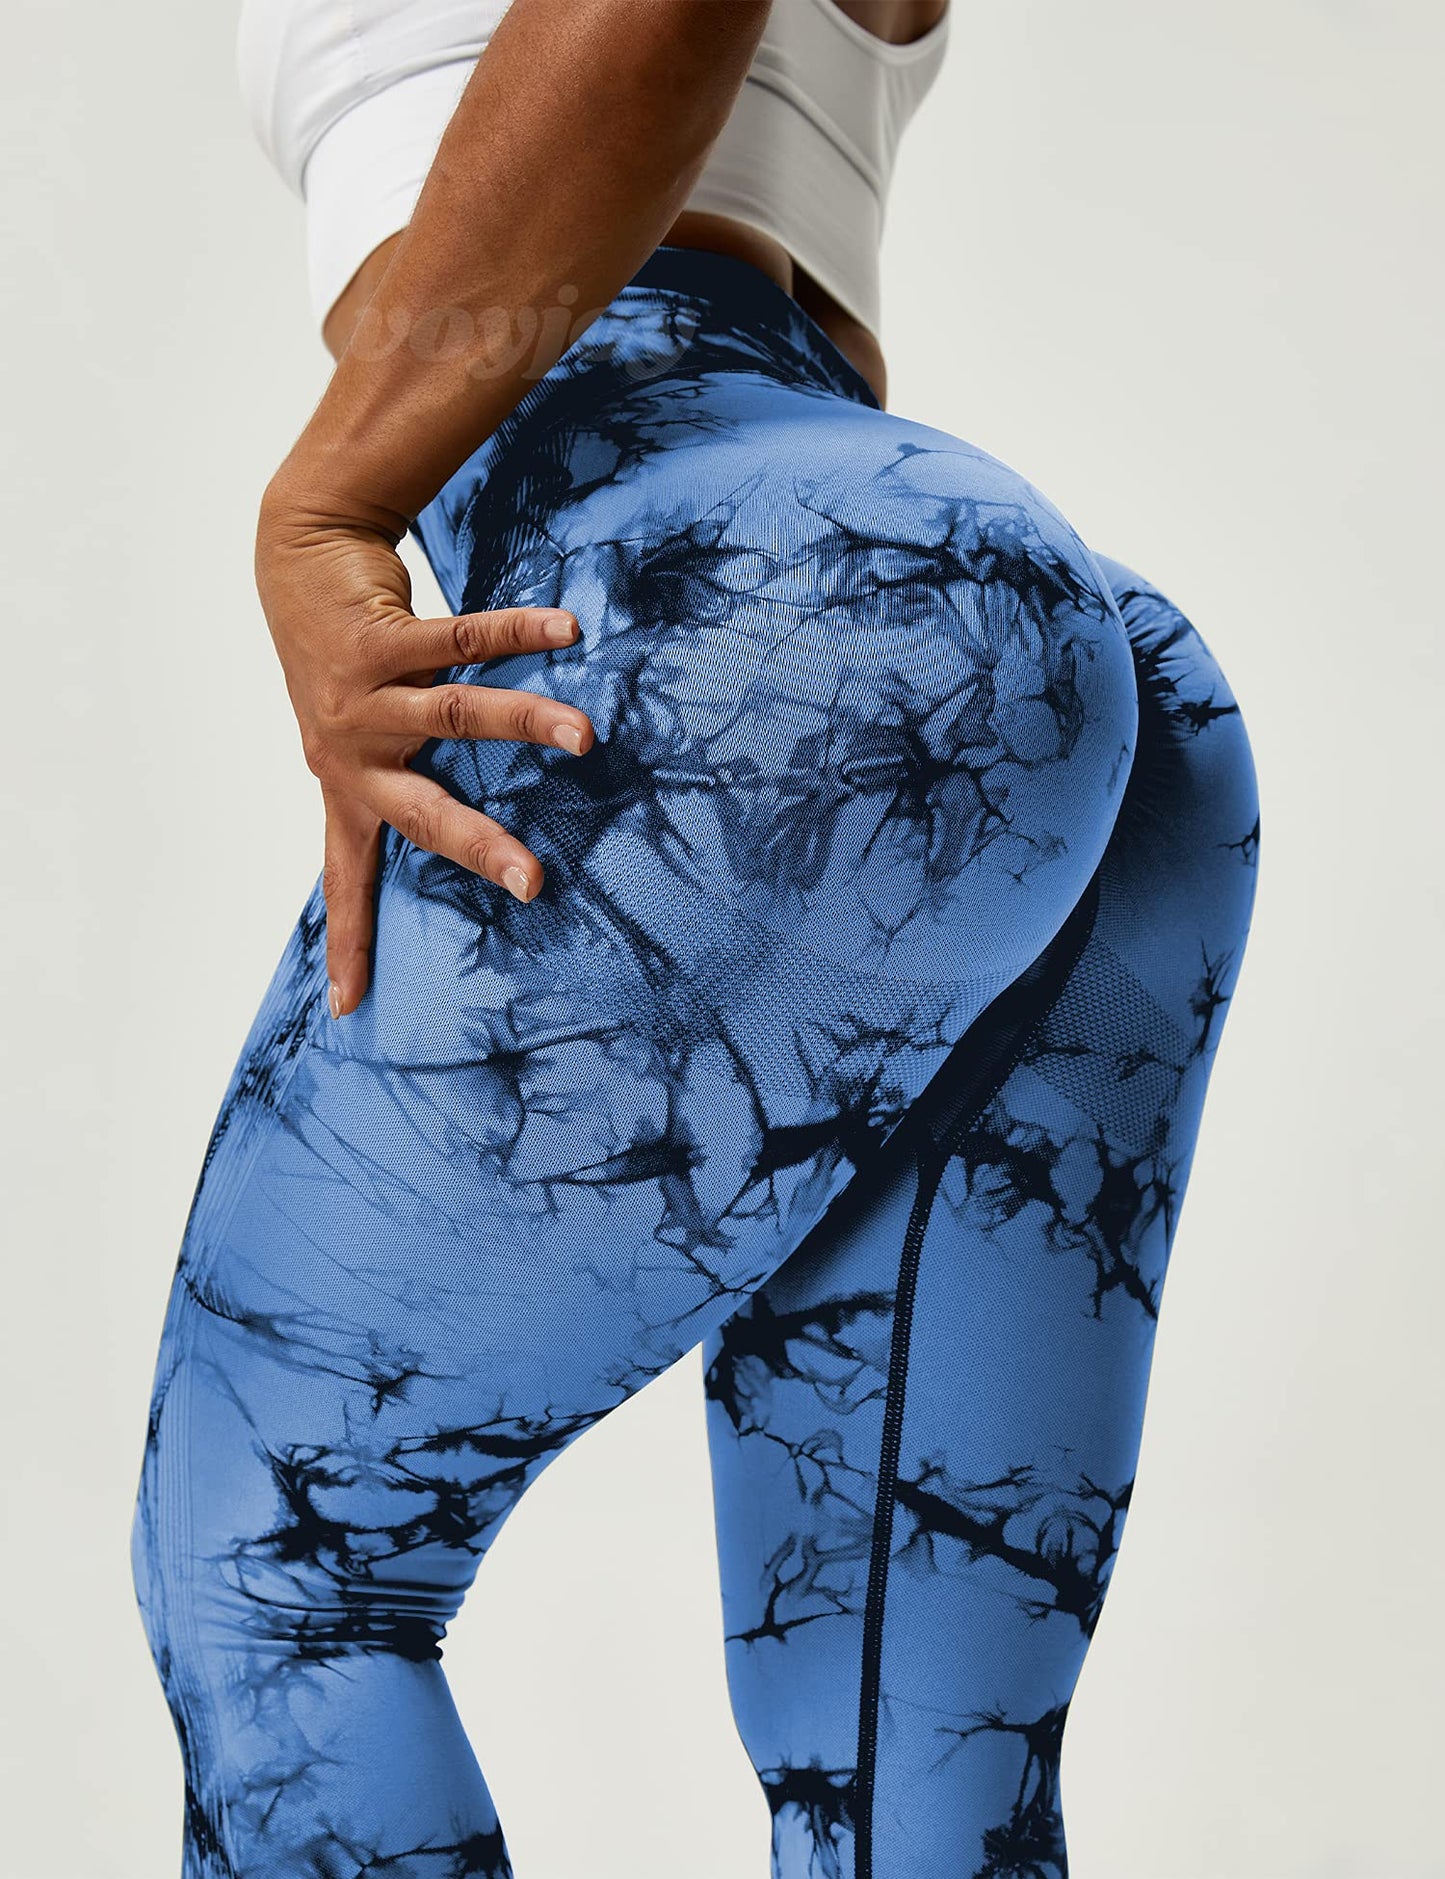 VOYJOY Tie Dye Seamless Leggings for Women High Waist Yoga Pants, Scrunch Butt Lifting Elastic Tights Deep Blue